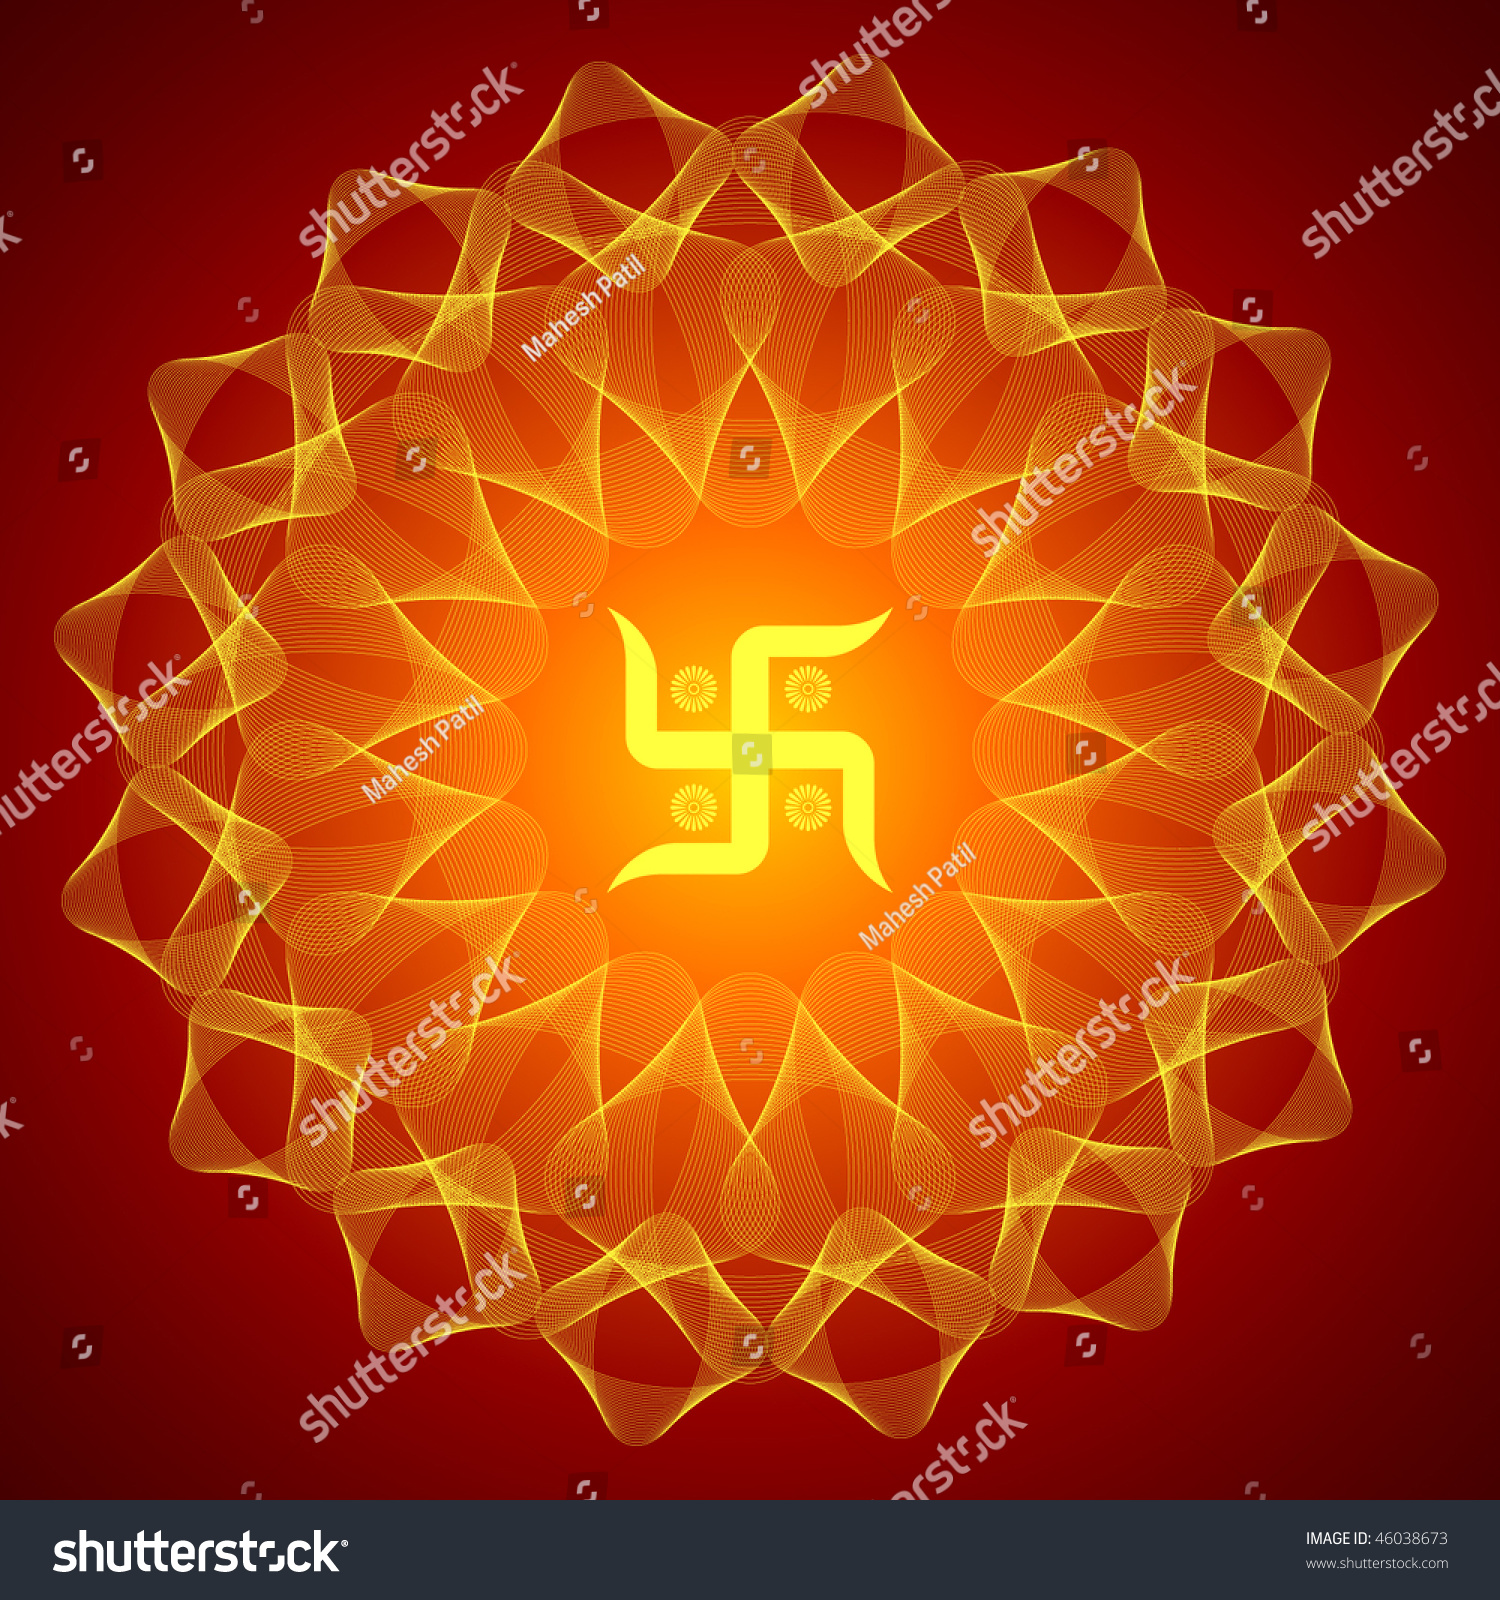 Spiritual Swastika On Mandala Background Stock Vector Illustration ...